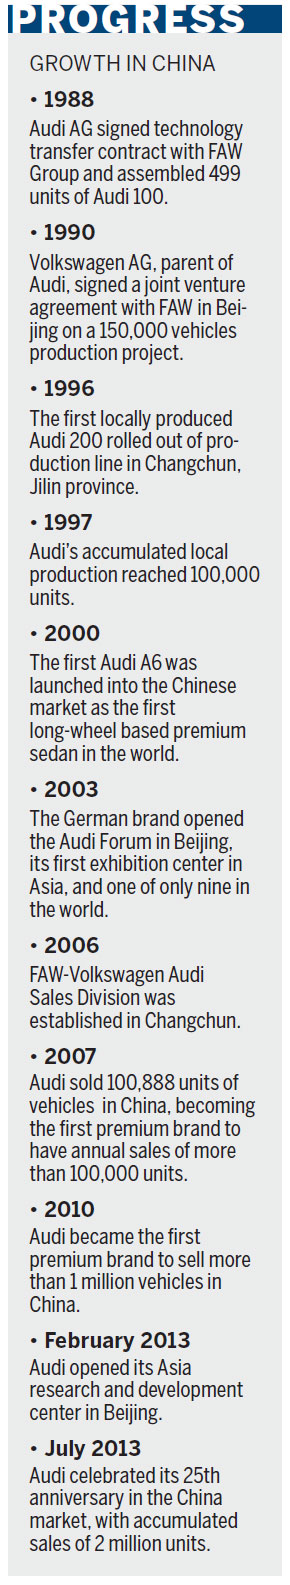 Audi making milestones in Chinese market